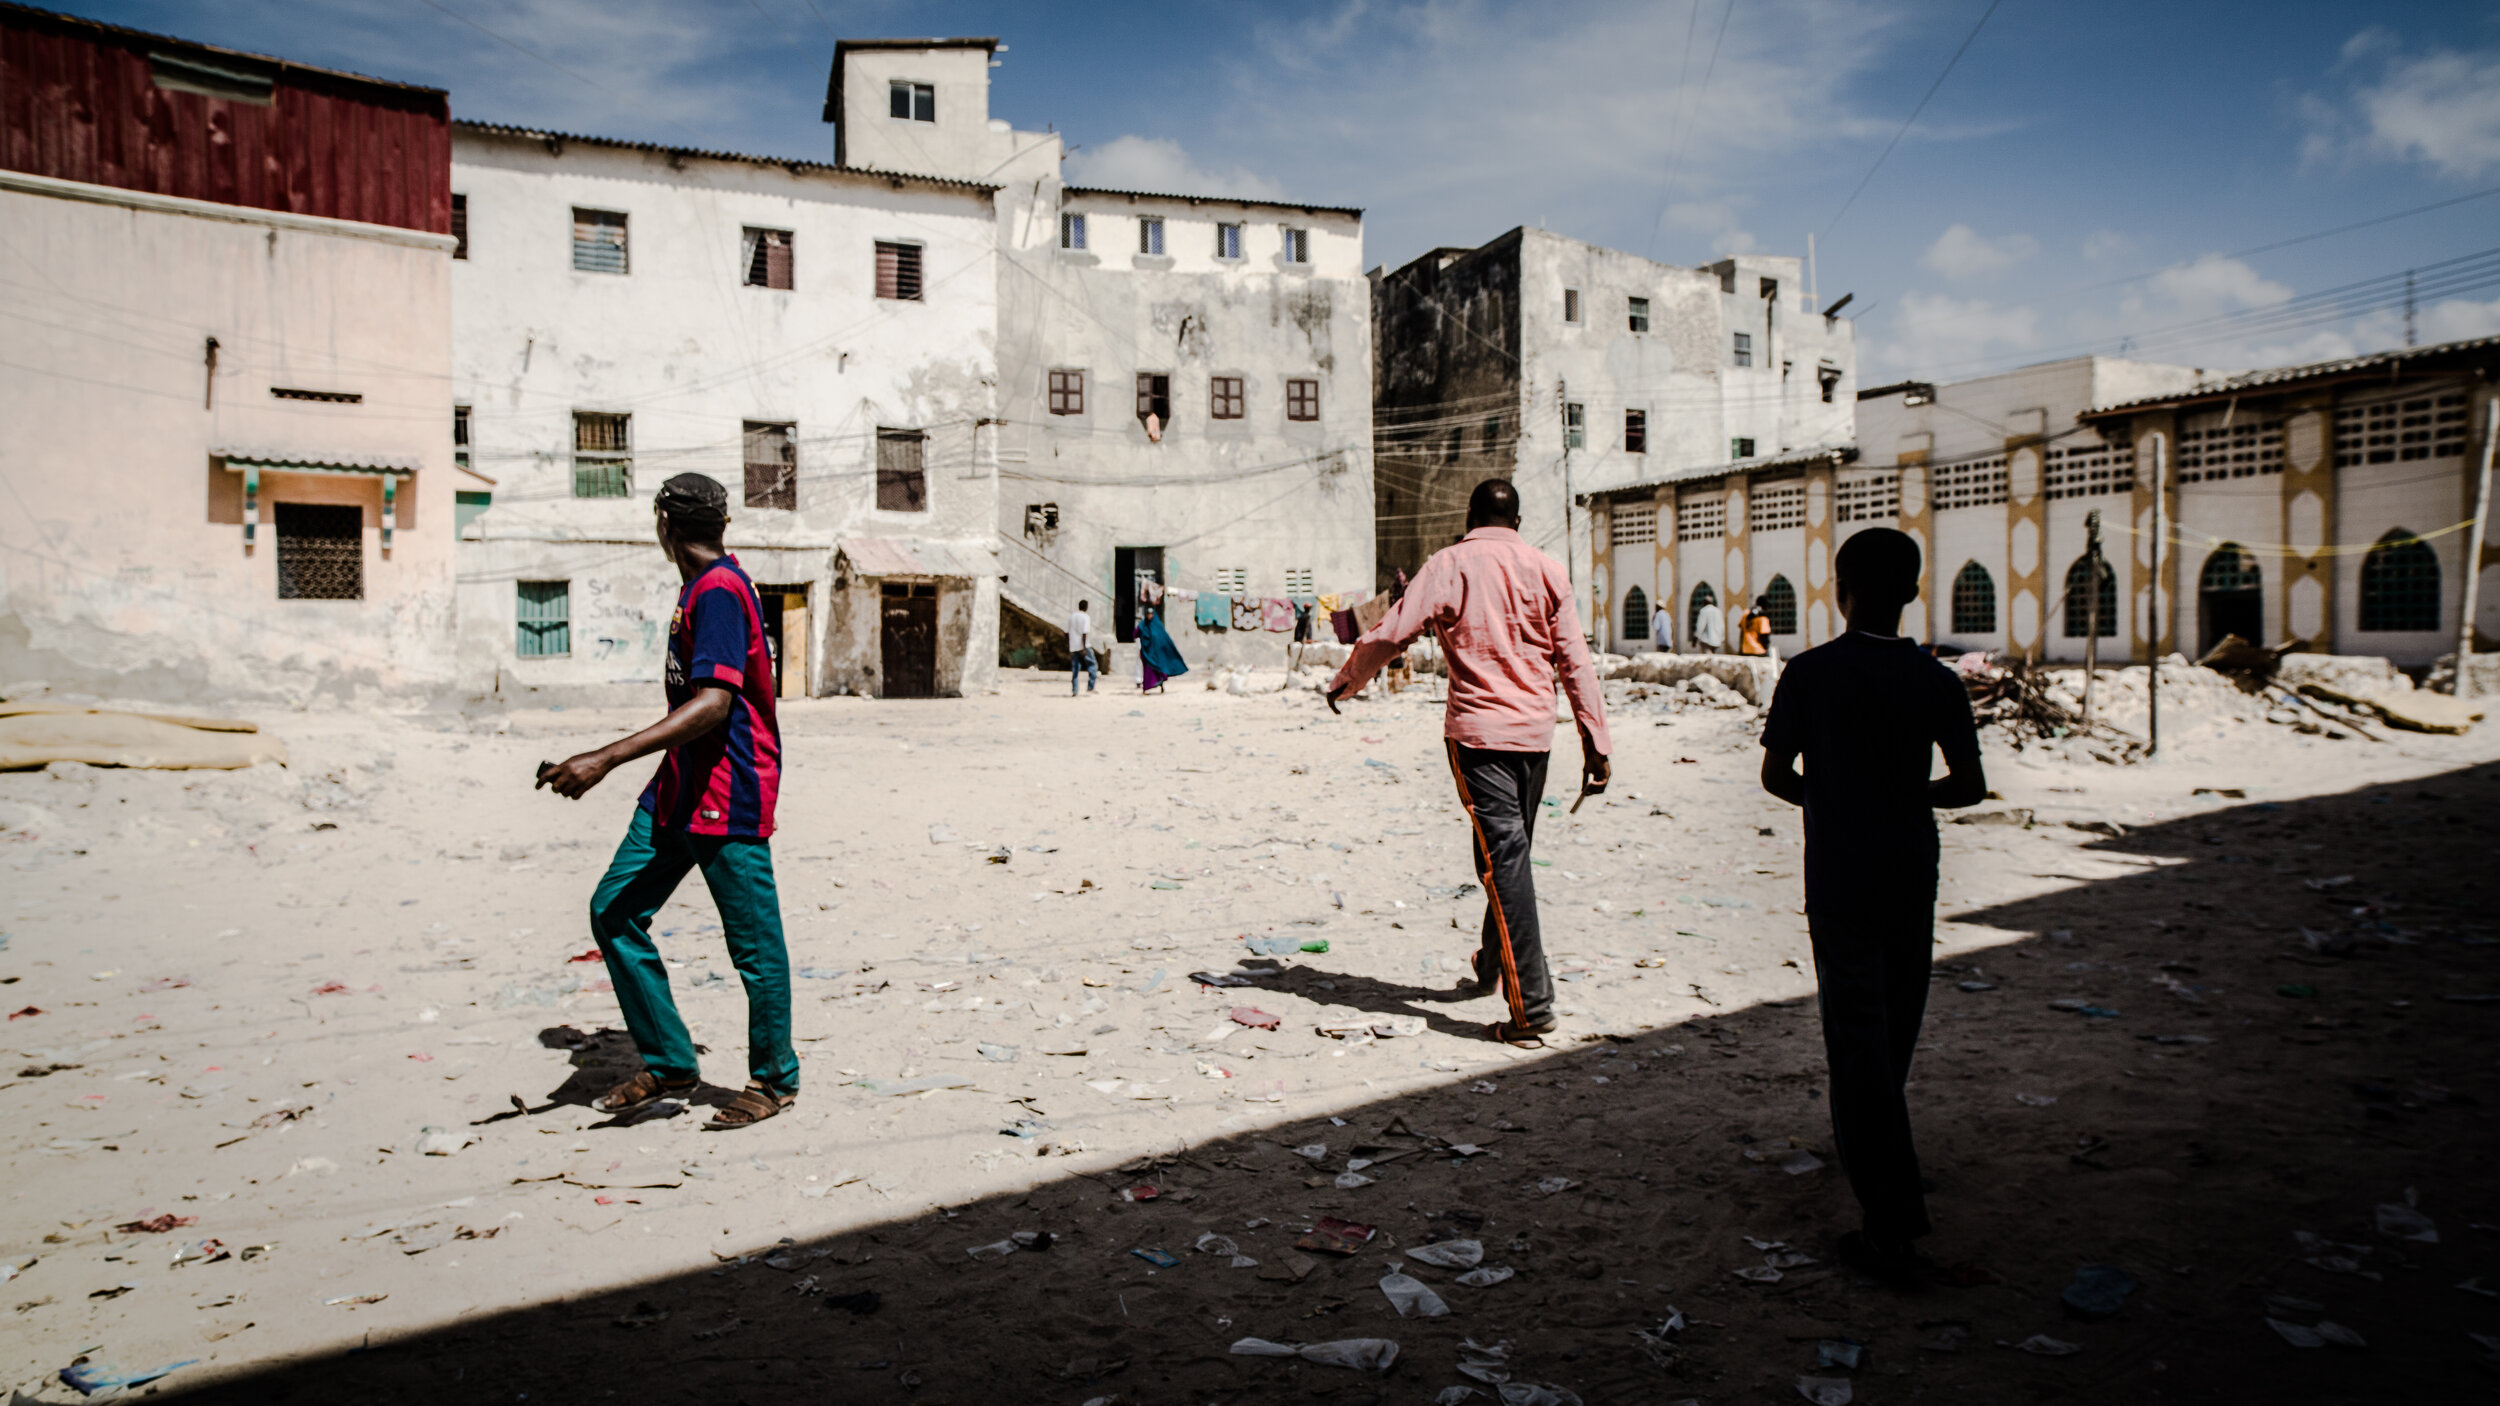  Mogadishu streets, Somalia, 2017 